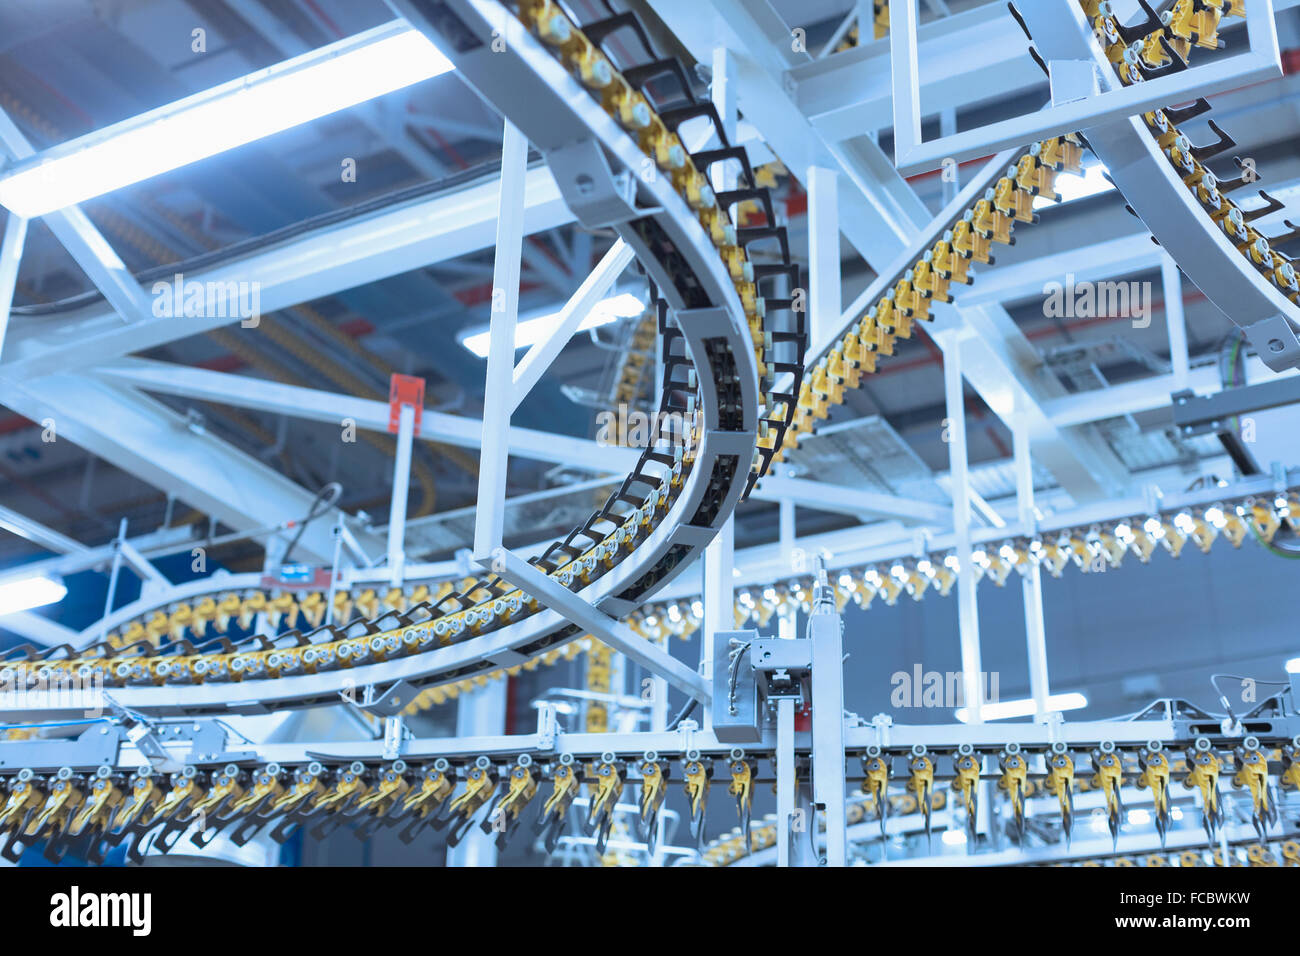 Winding printing press conveyor belts overhead Stock Photo